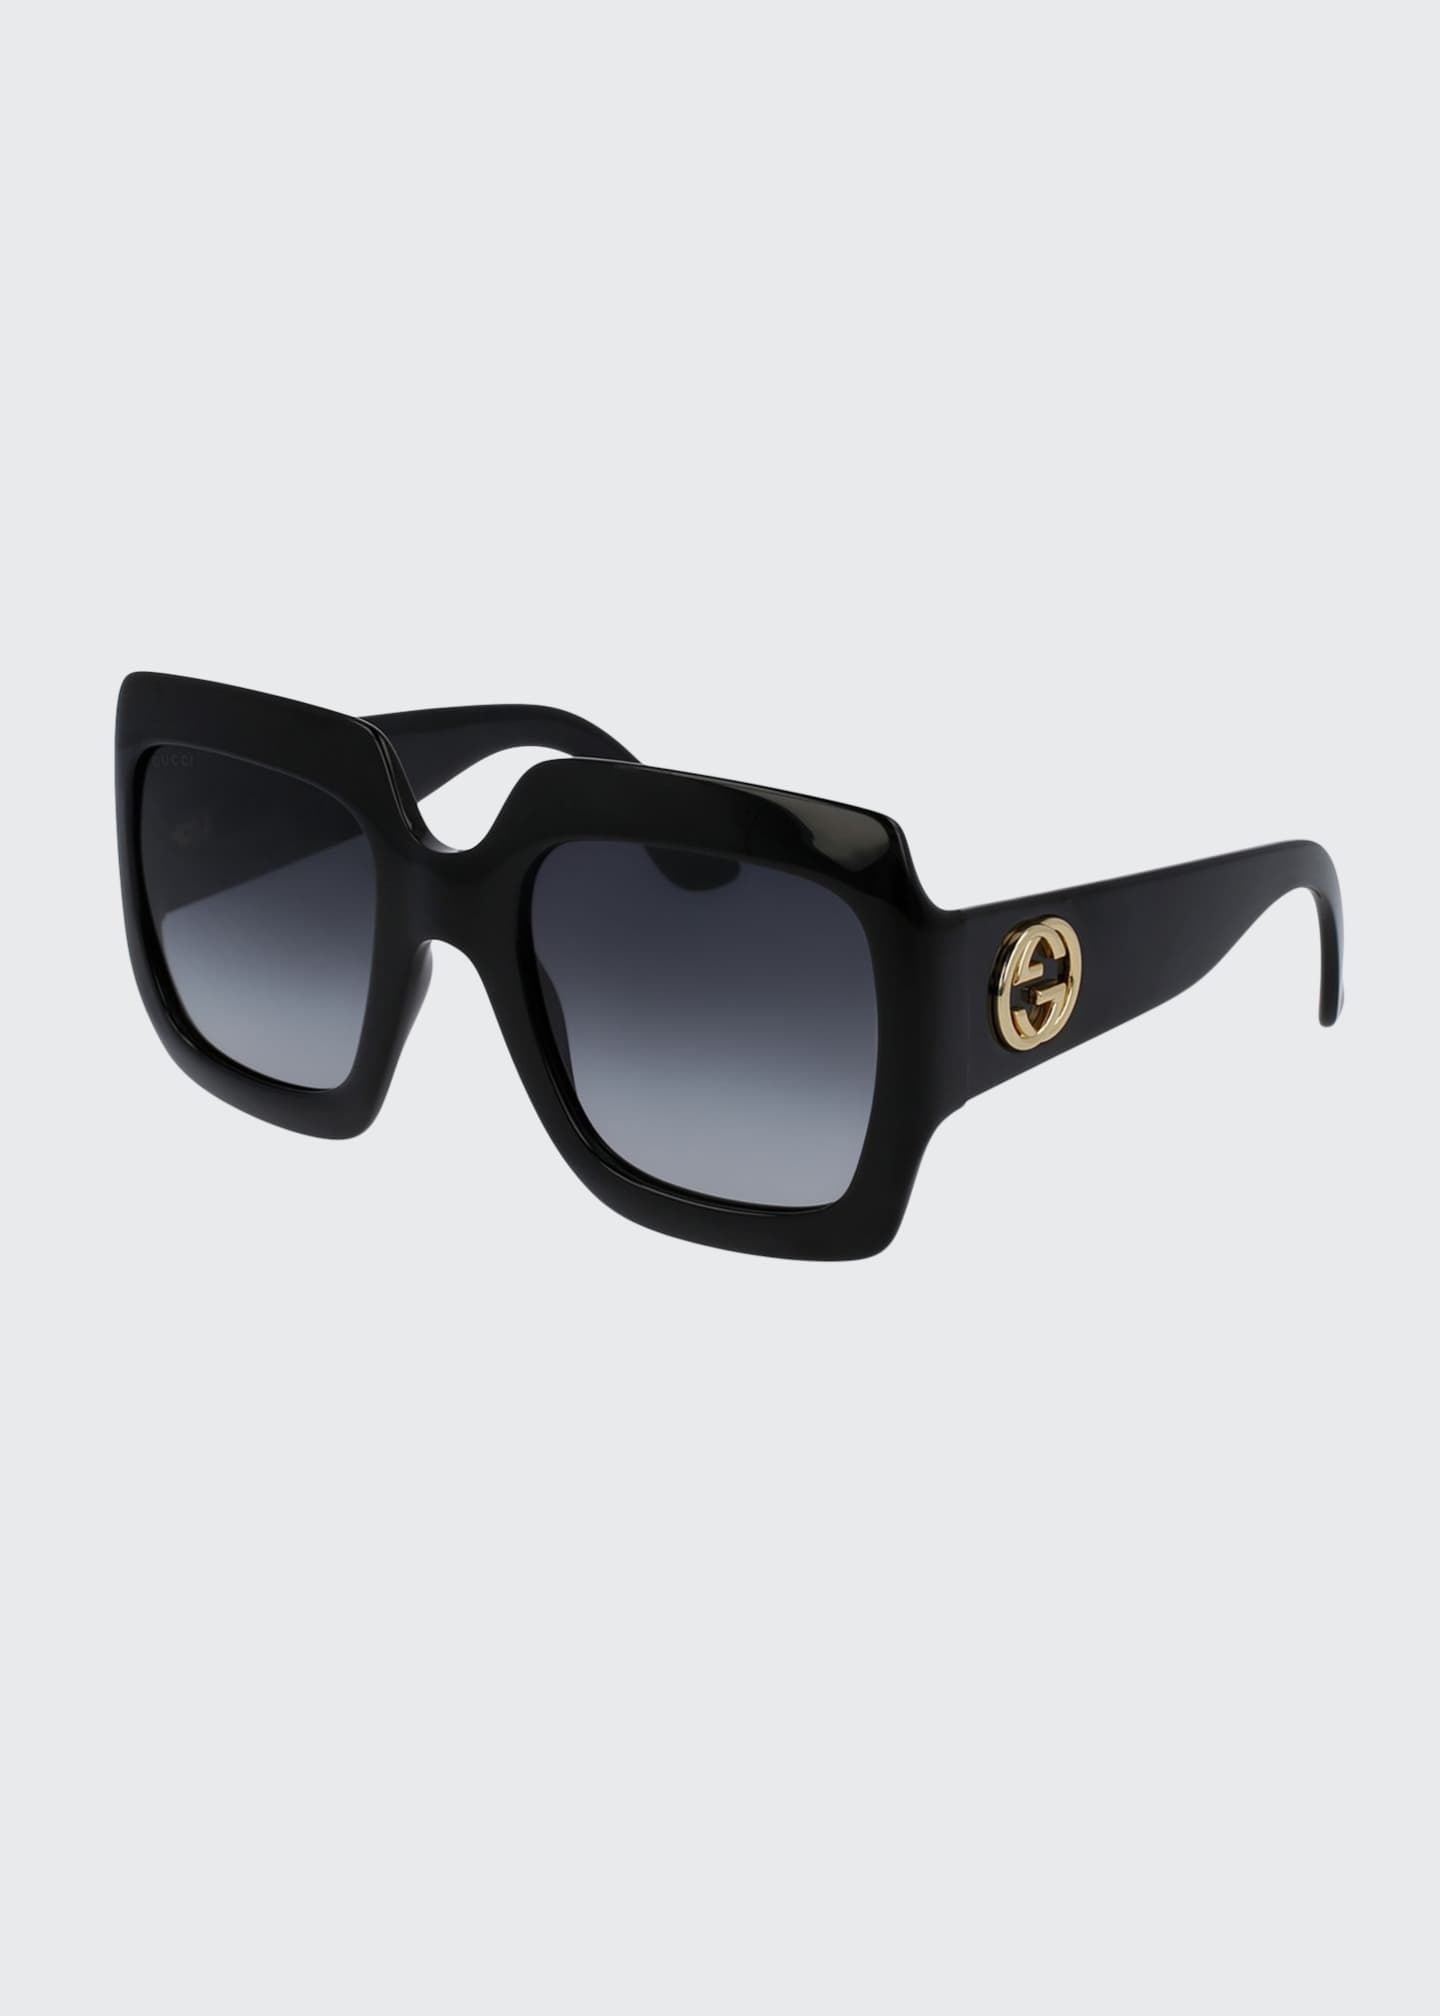 Gucci Oversized Square Sunglasses, Black - Bergdorf Goodman